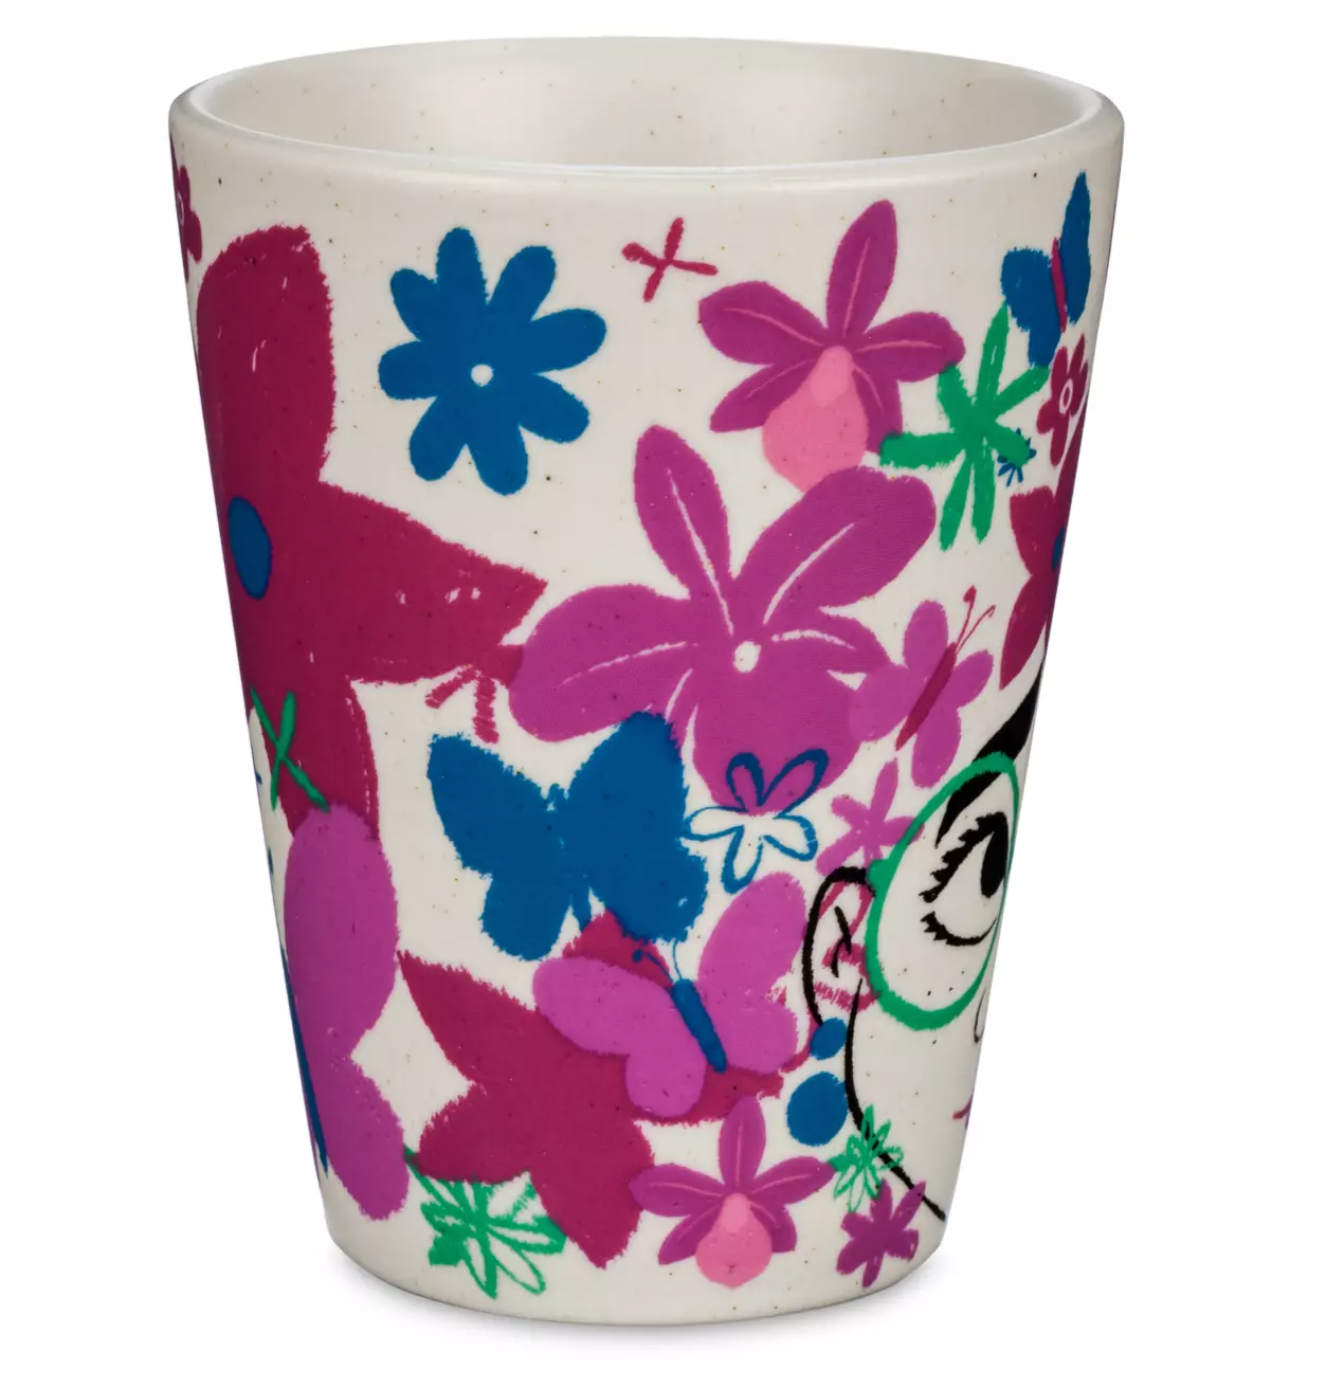 Disney Encanto Mirabel Flower and Butterfly Design Ceramic Coffee Mug New